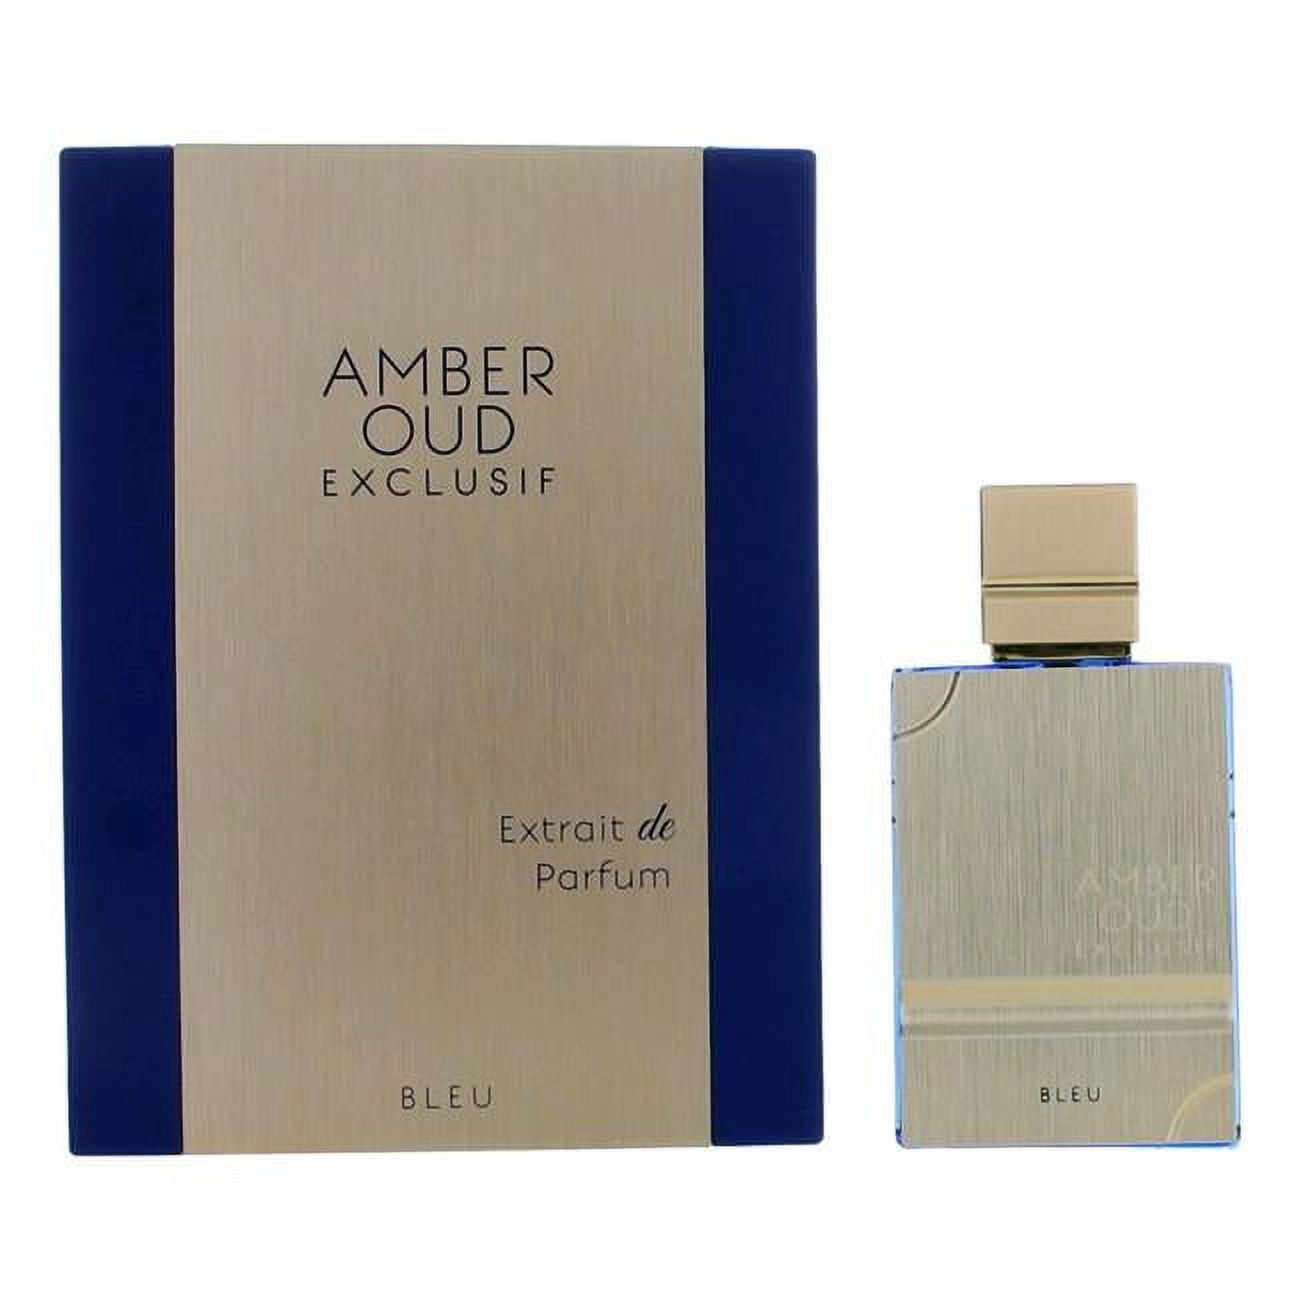 Disponible en Best Perfumes Miami📍 el nuevo Amber Oud Exclusif Bleu  Extrait de Parfum 🔵 #colombia #perfume #amberoudexclusif #alhamarain…